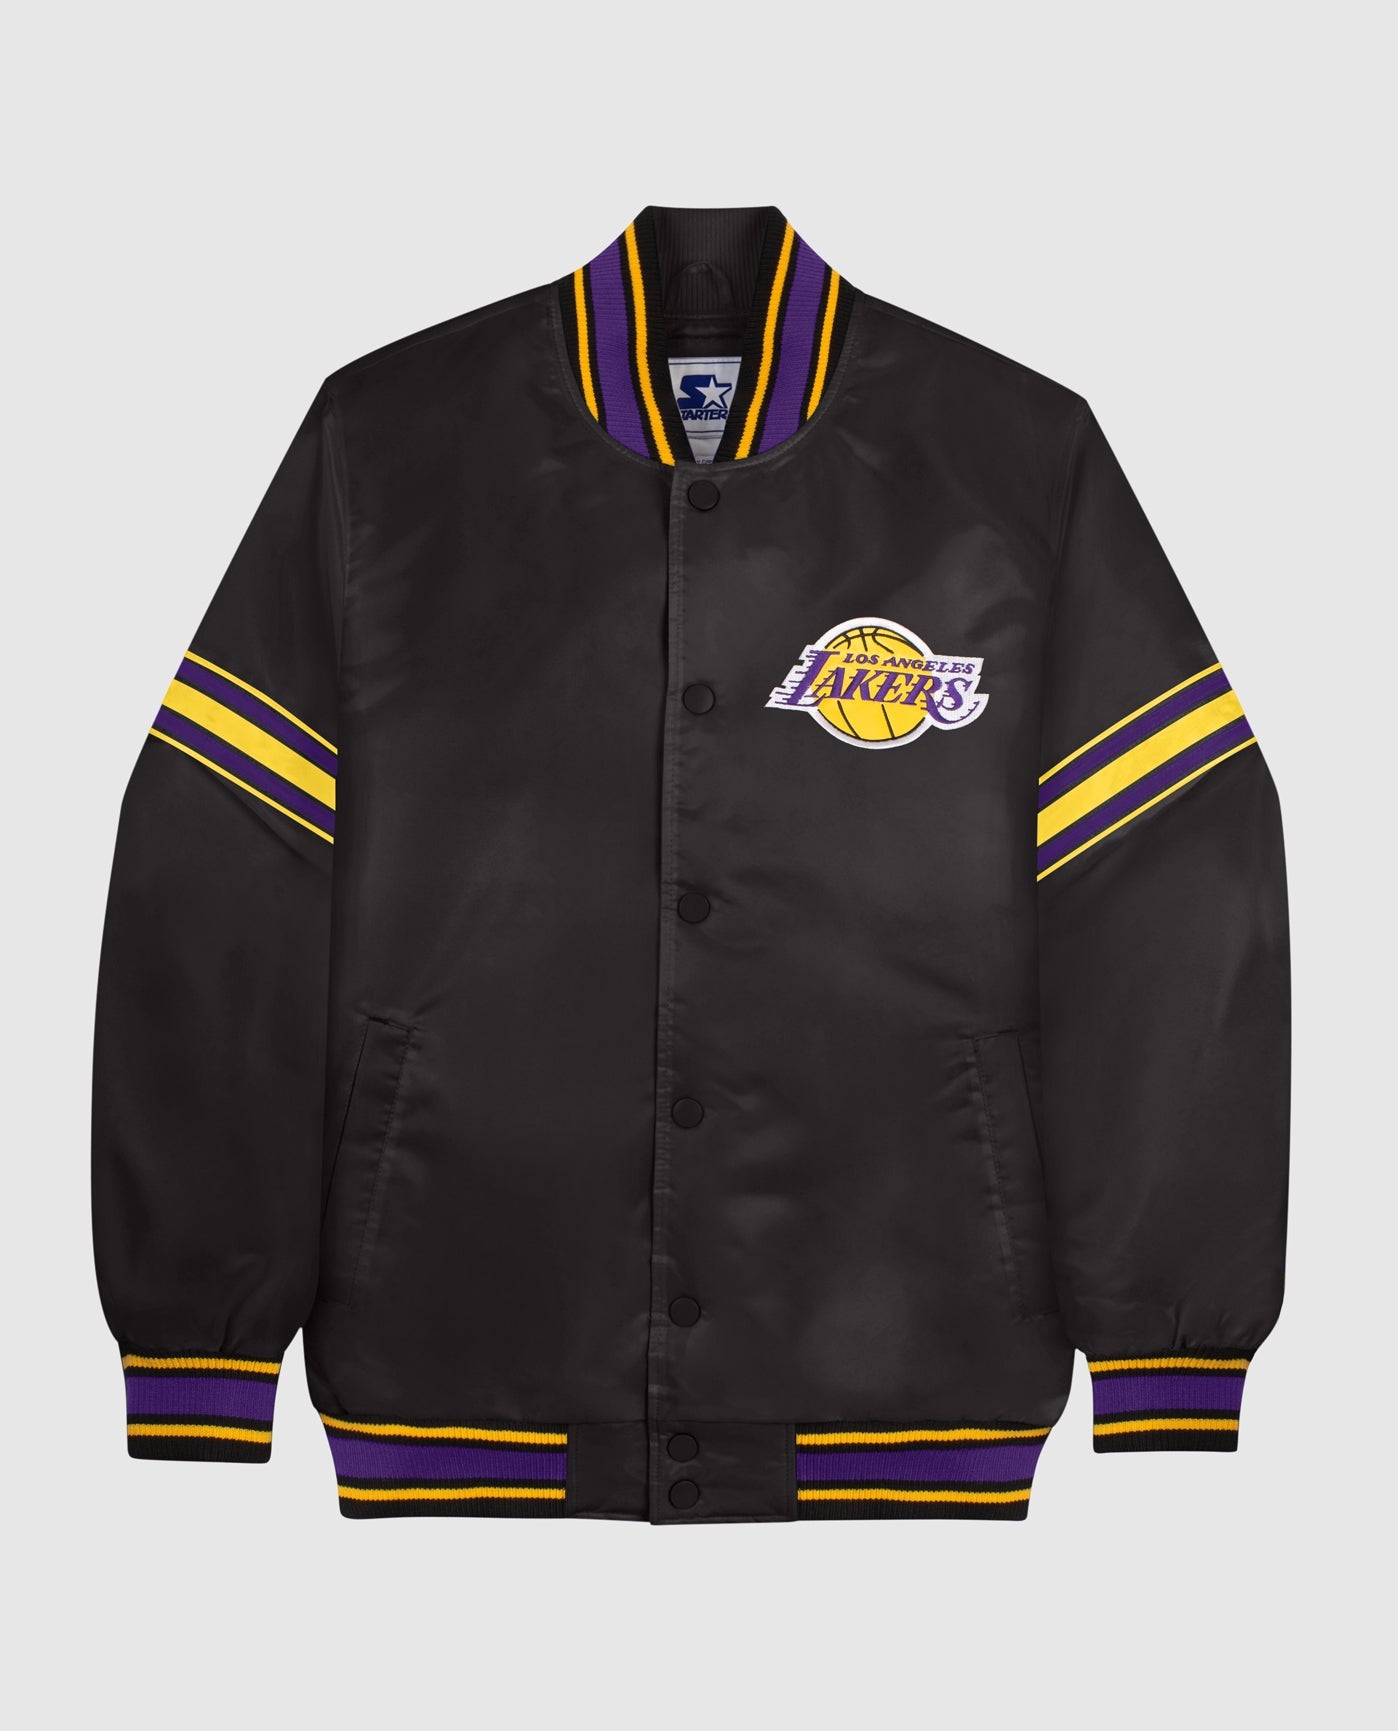 Maker of Jacket Clearance Sale Los Angeles Lakers NBA Varsity Size Men's XL